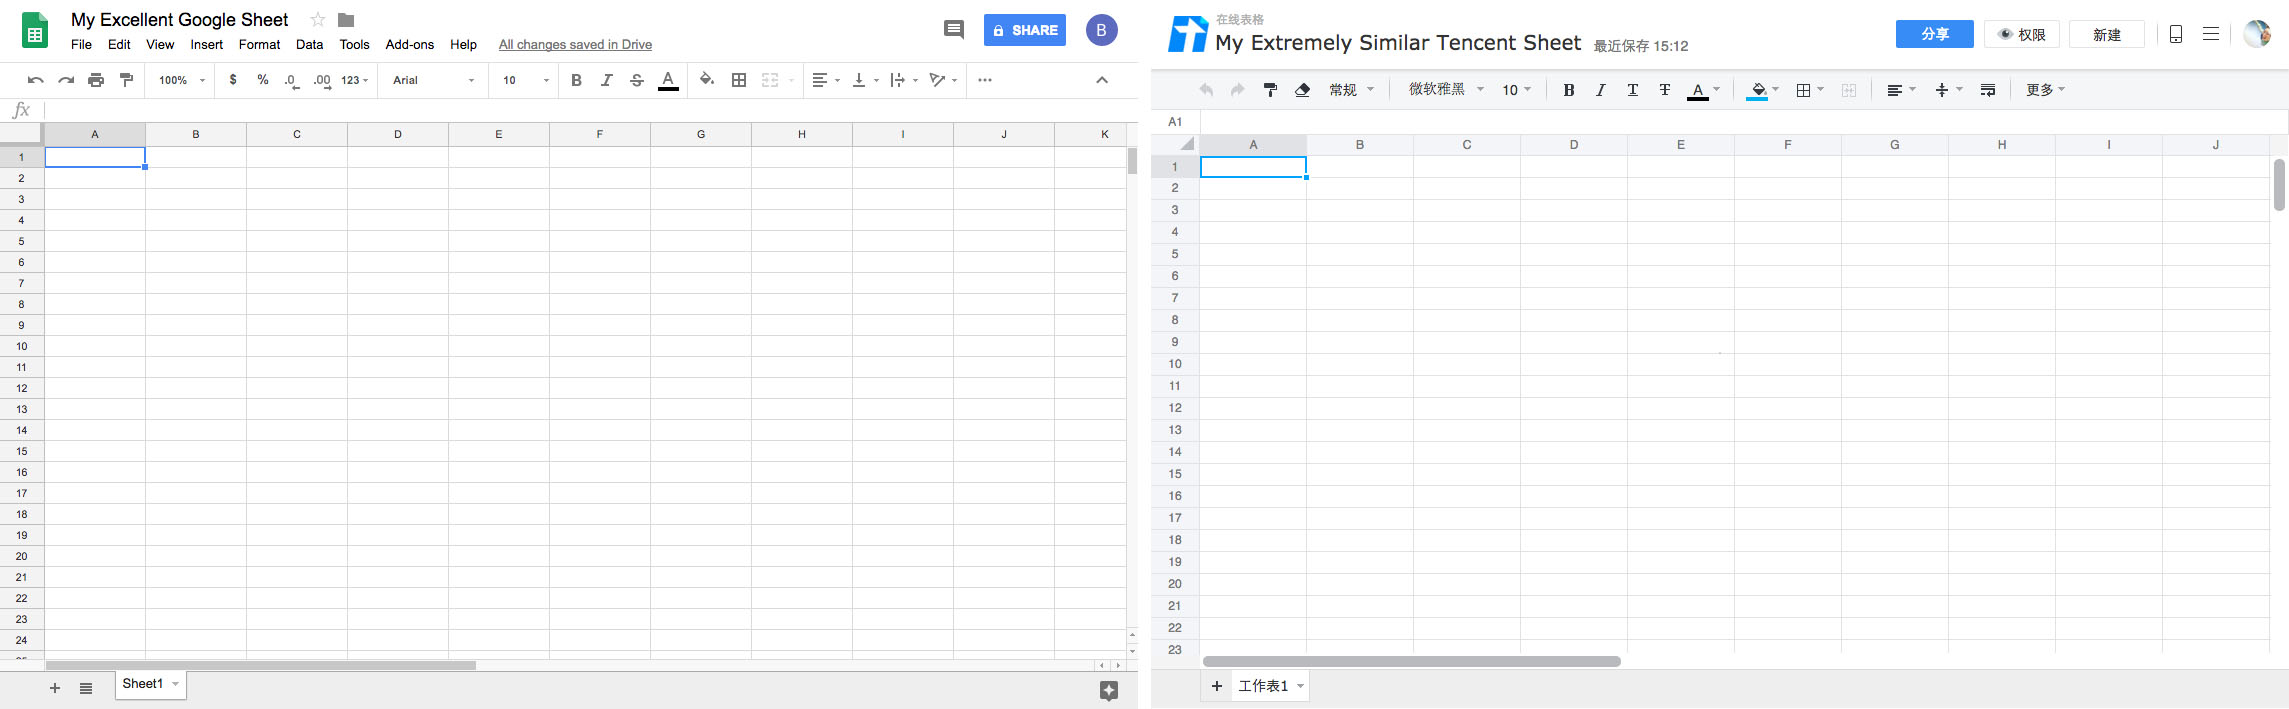 Google Sheet vs. Tencent Sheet